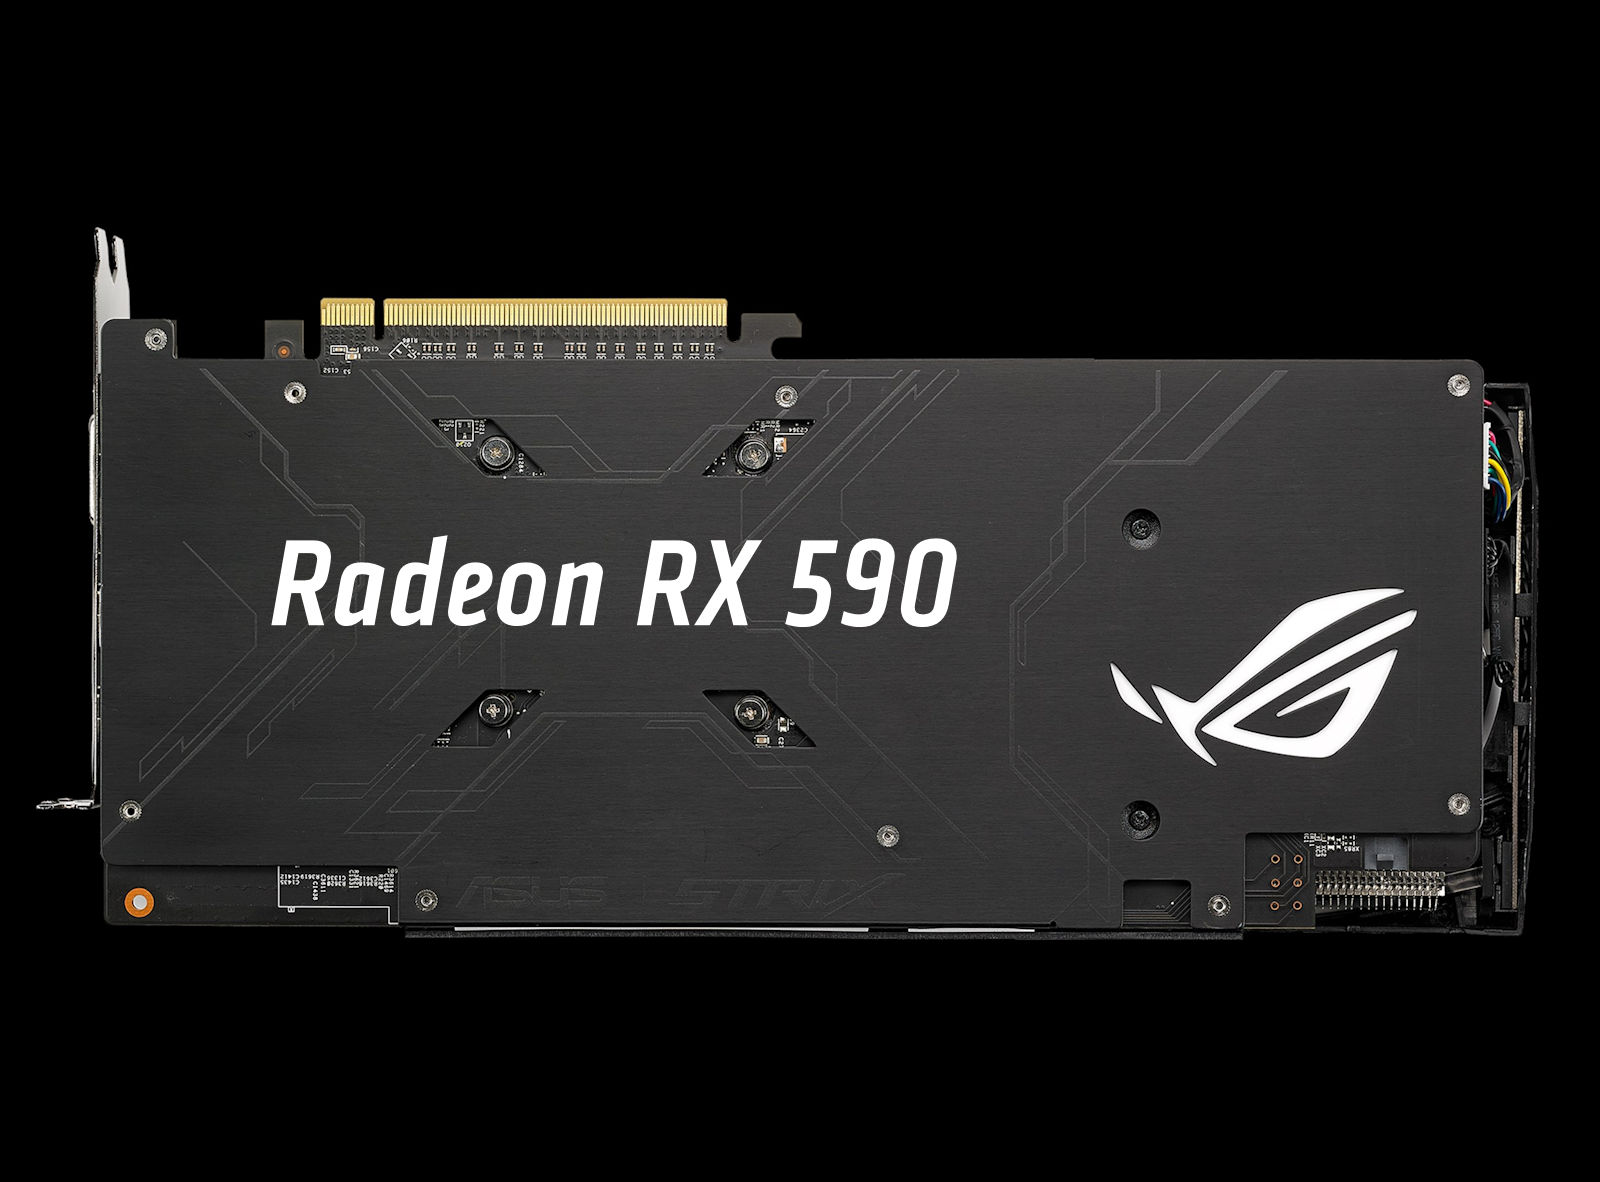 Asus Preparing Radeon Rx 590 Rog Strix Graphics Card Videocardz Com